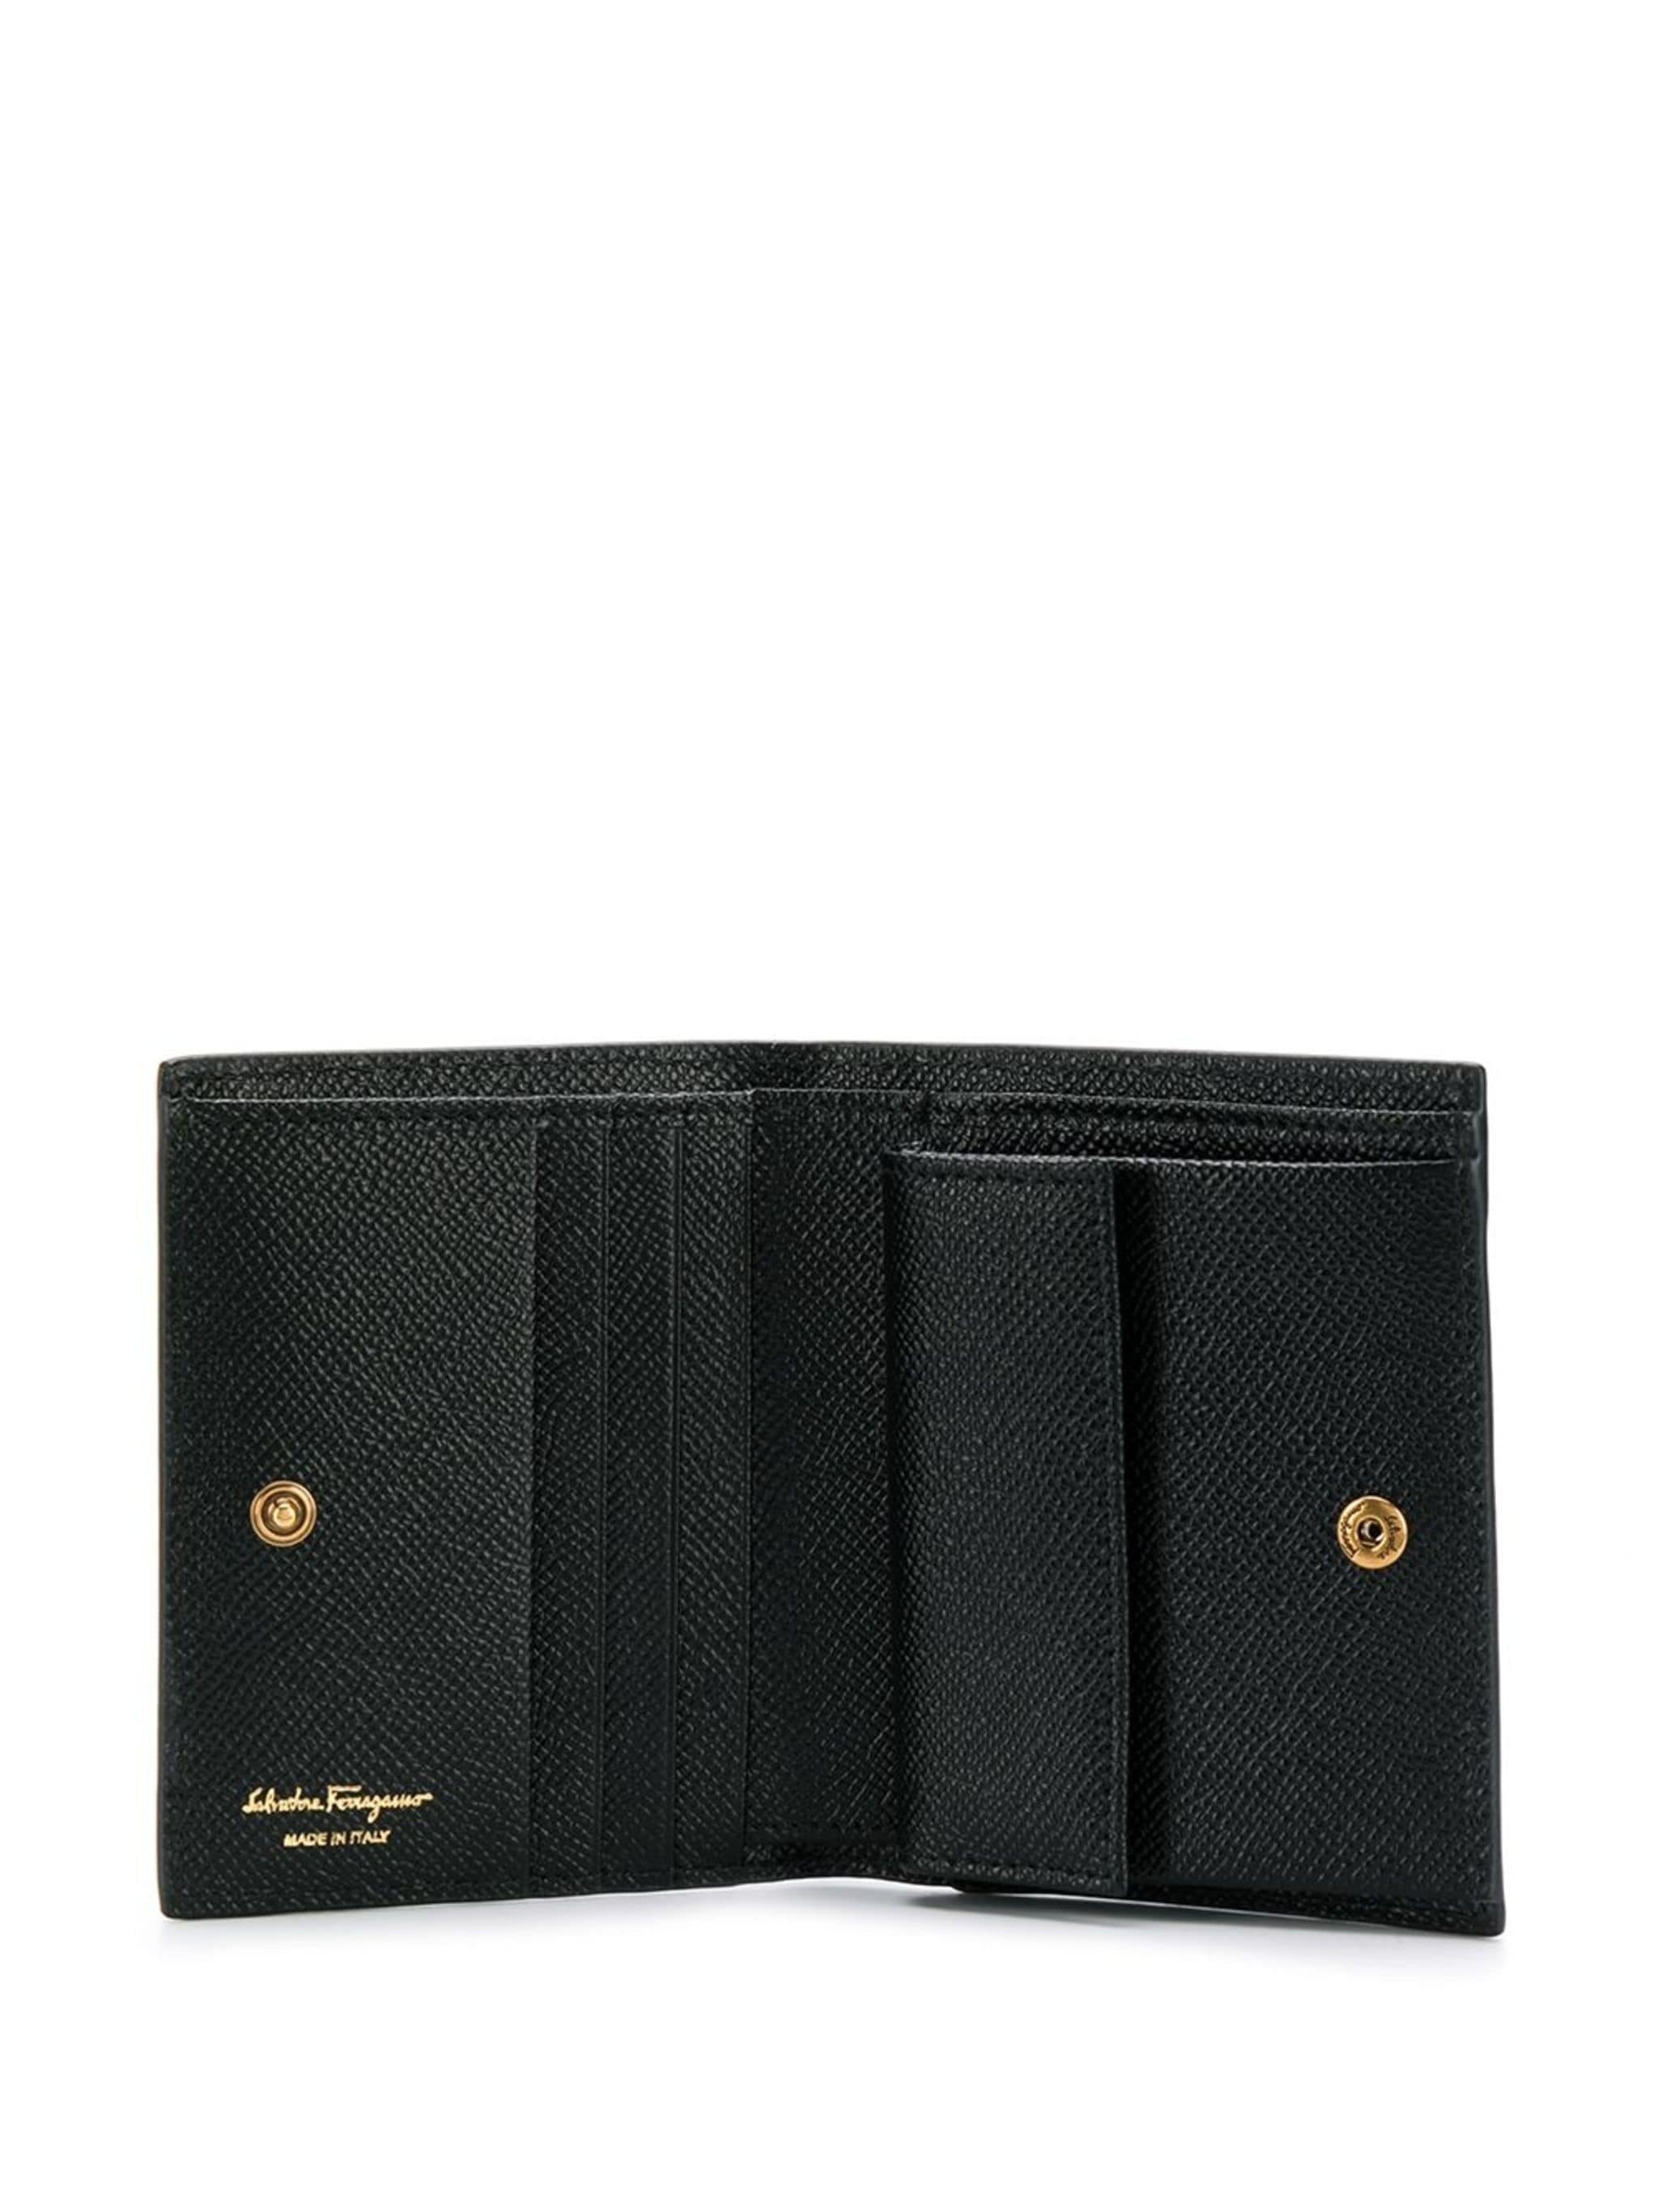 Gancini folding wallet - 3